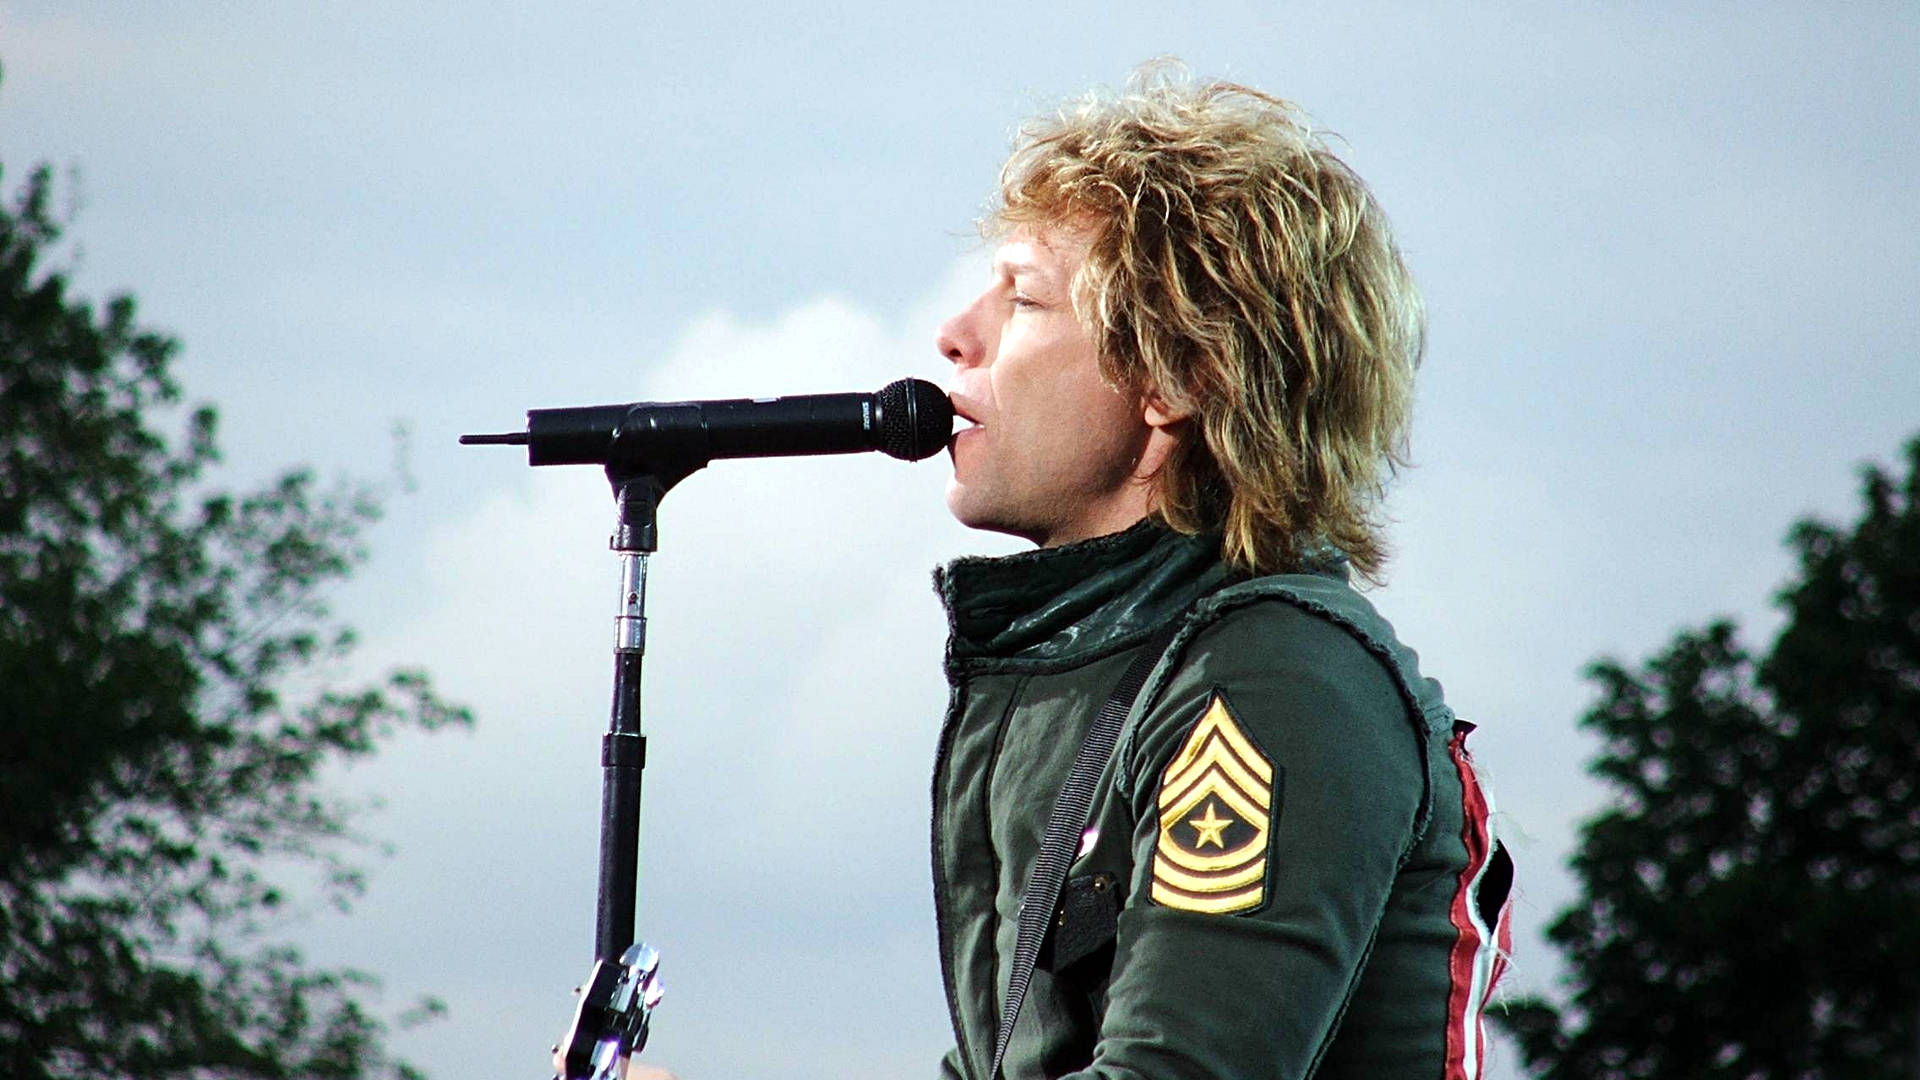 American Singer Jon Bon Jovi 2006 Nijmegen Netherlands Wallpaper